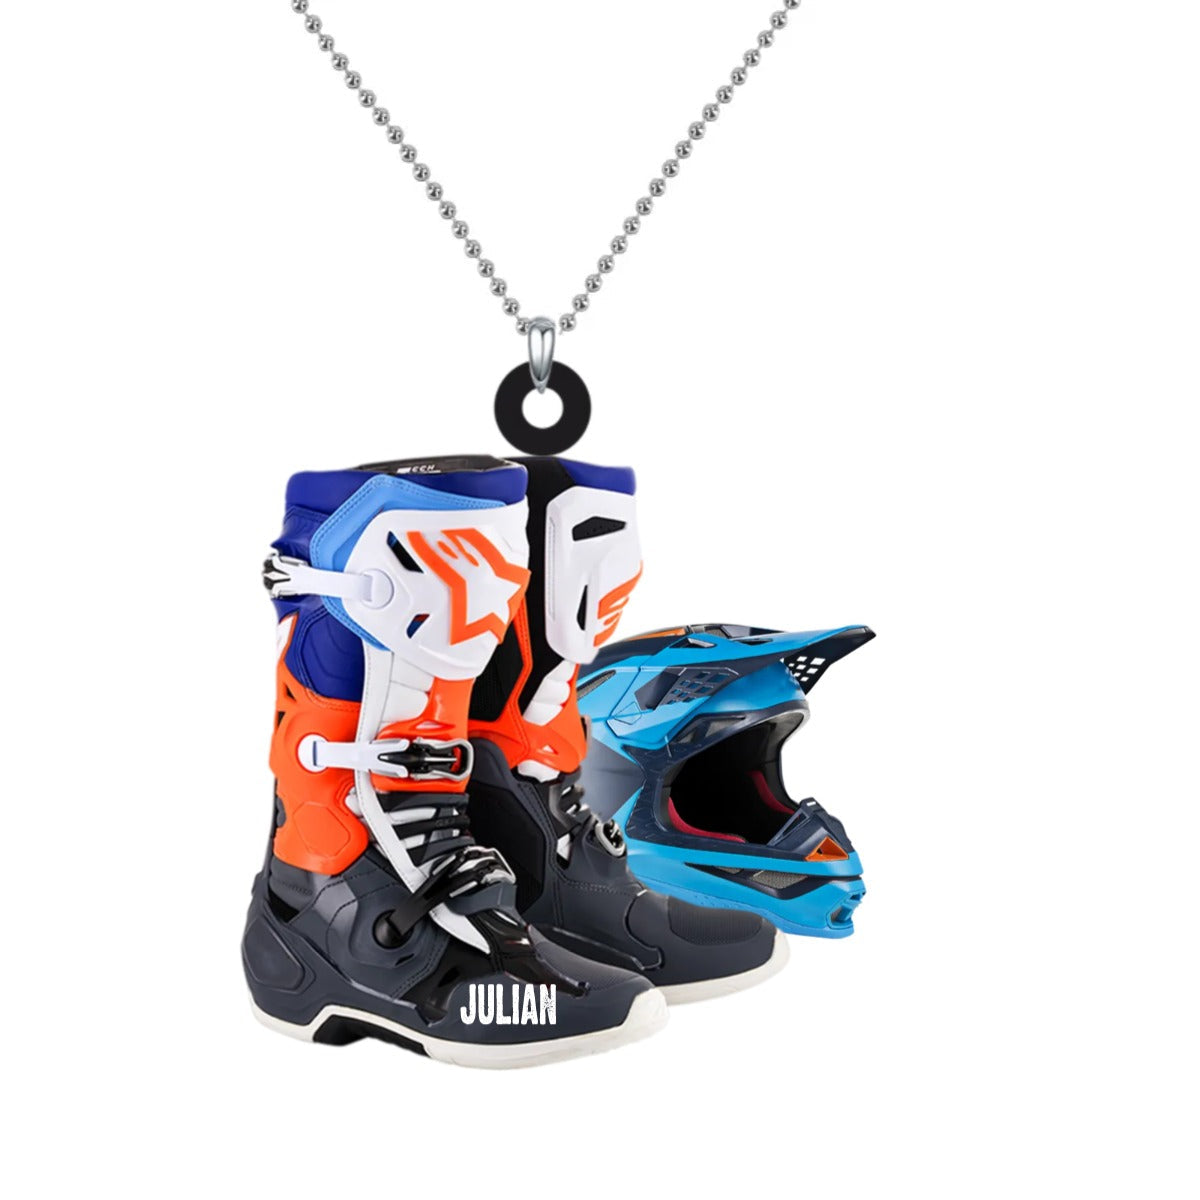 Personalized Motocross Boots Helmet Car Hanging Ornament/ Motocross Boots Helmet Ornament